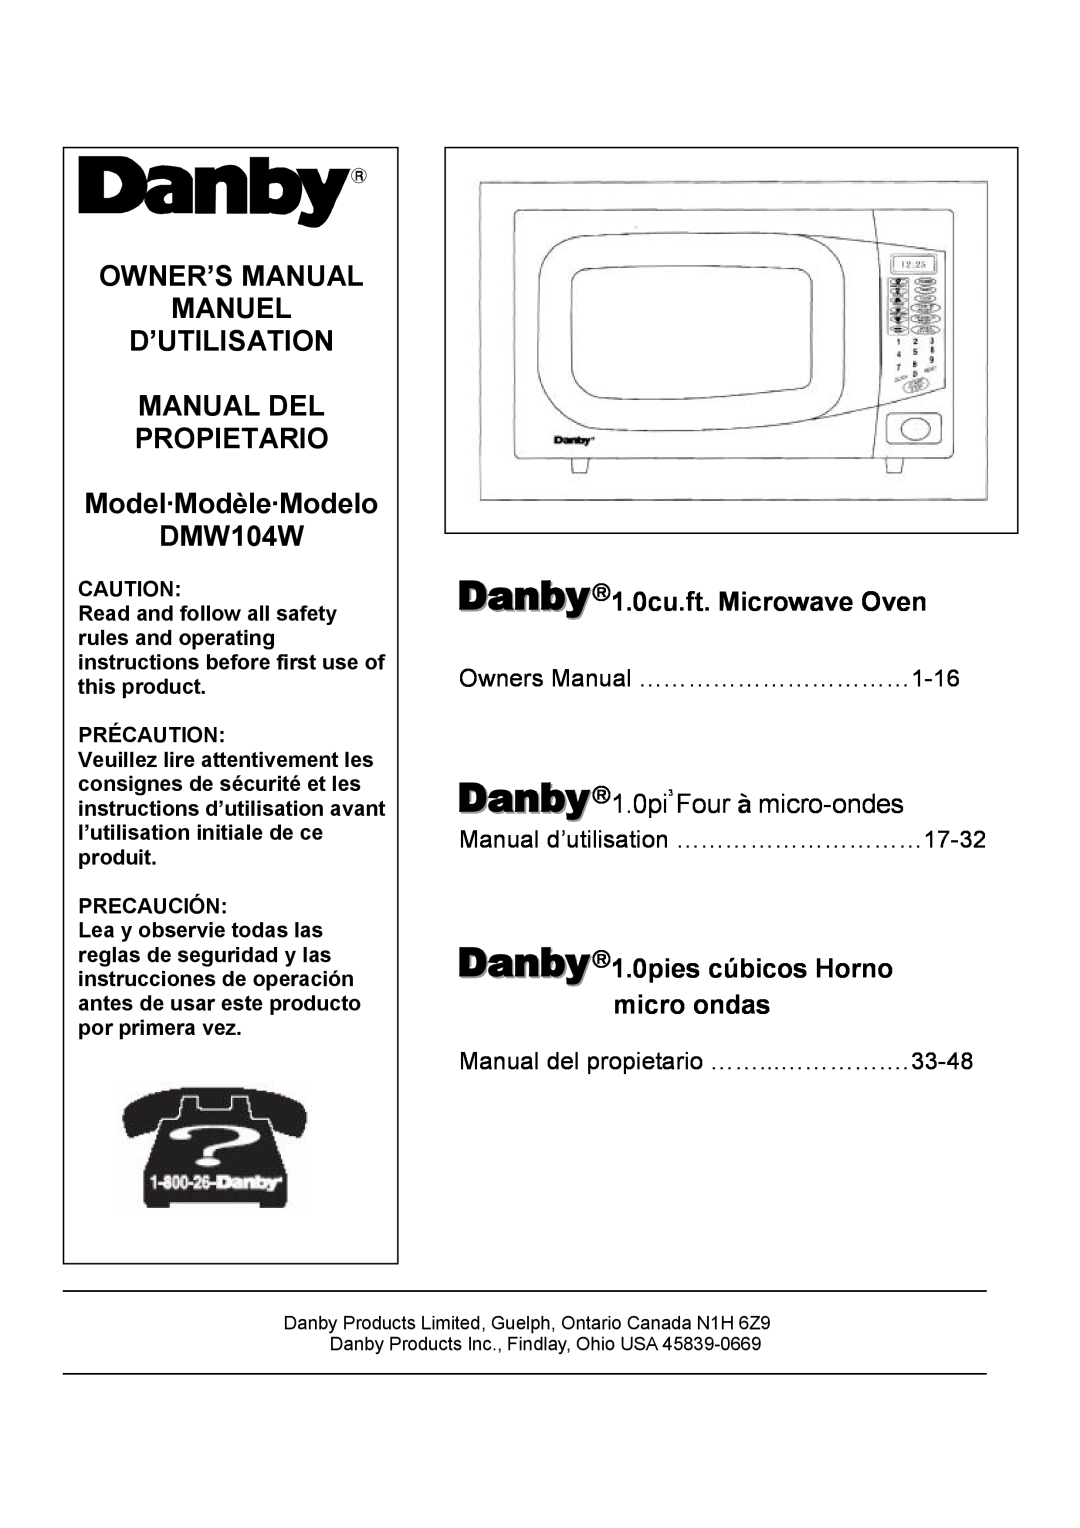 Danby owner manual PROPIETARIO Model·Modèle·Modelo DMW104W, Danby1.0cu.ft. Microwave Oven 